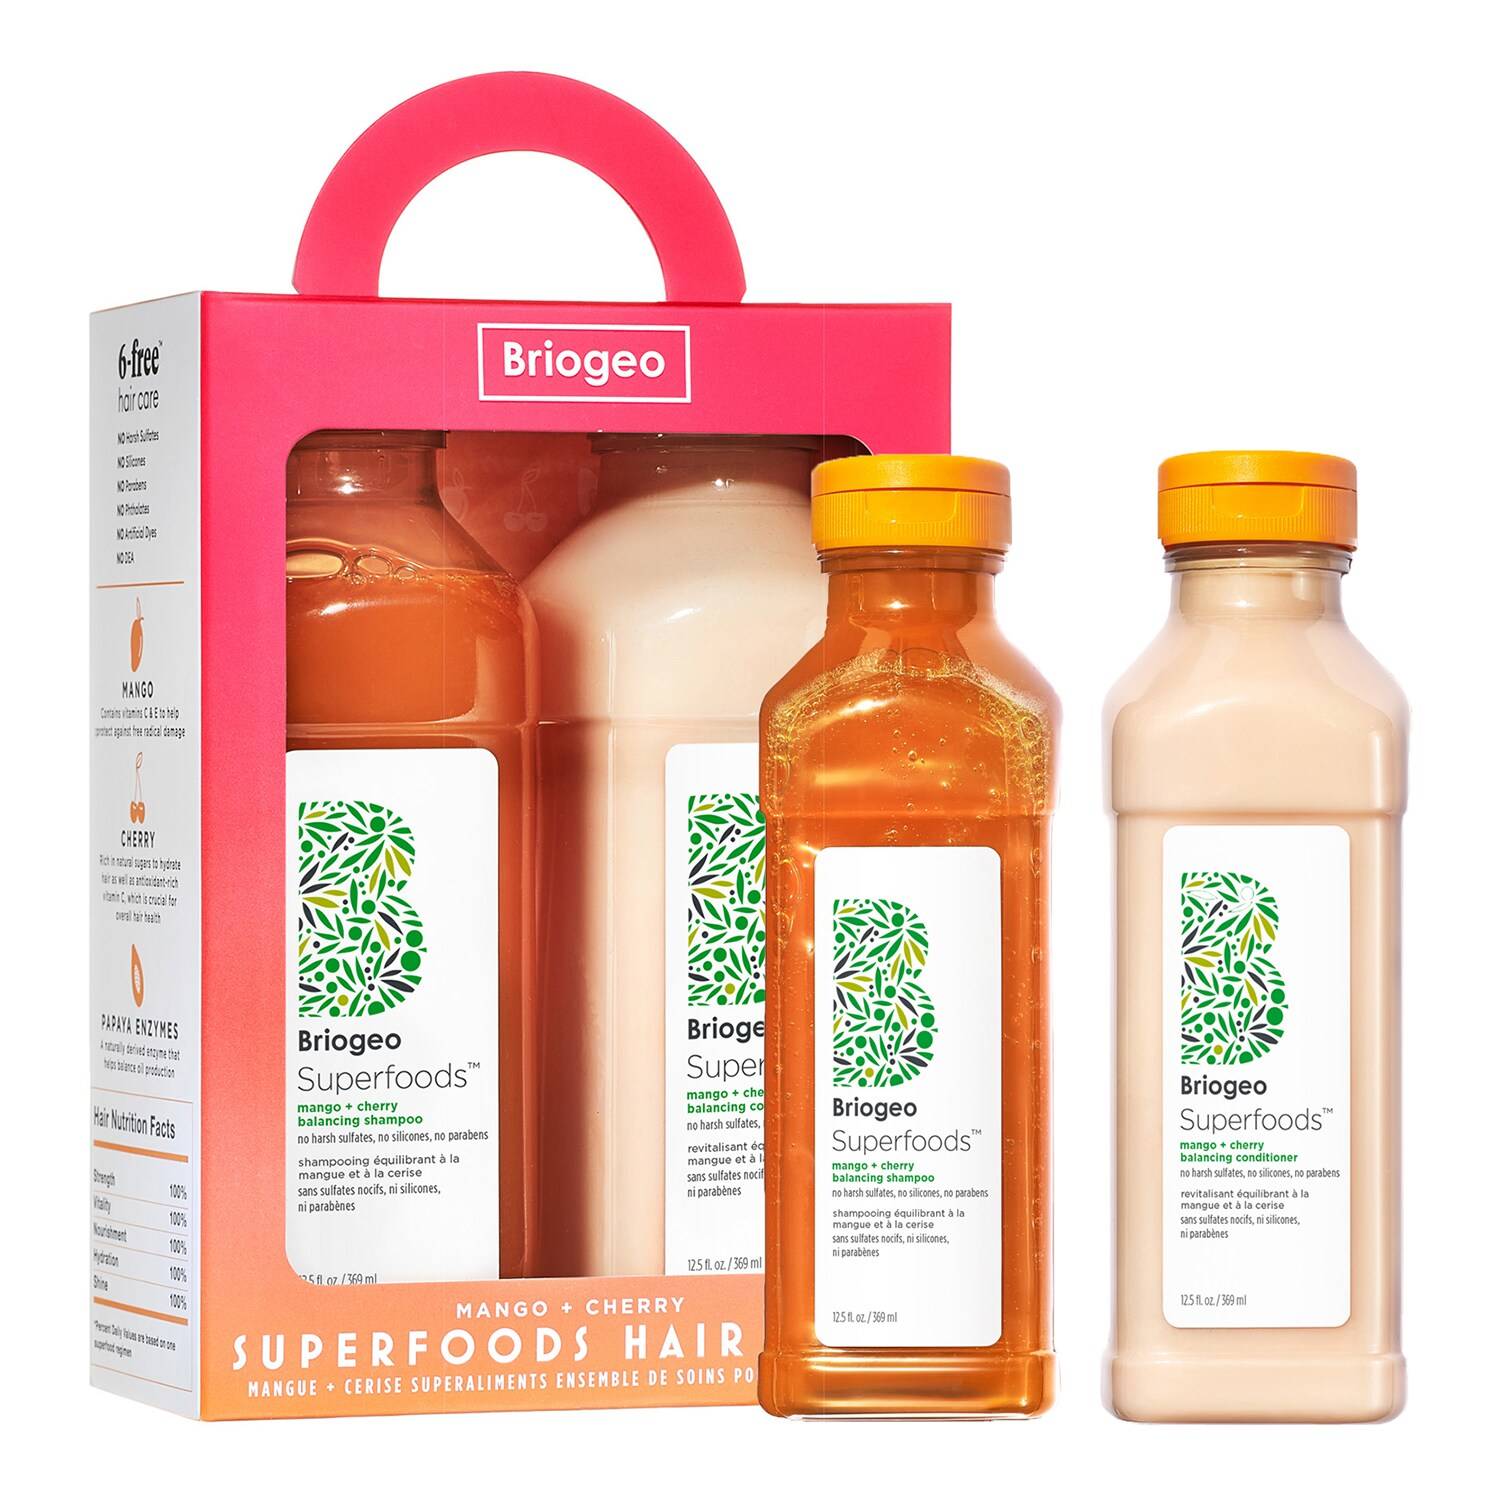 Briogeo Superfoods Mango + Cherry Balancing Shampoo + Conditioner Duo For Oil Control